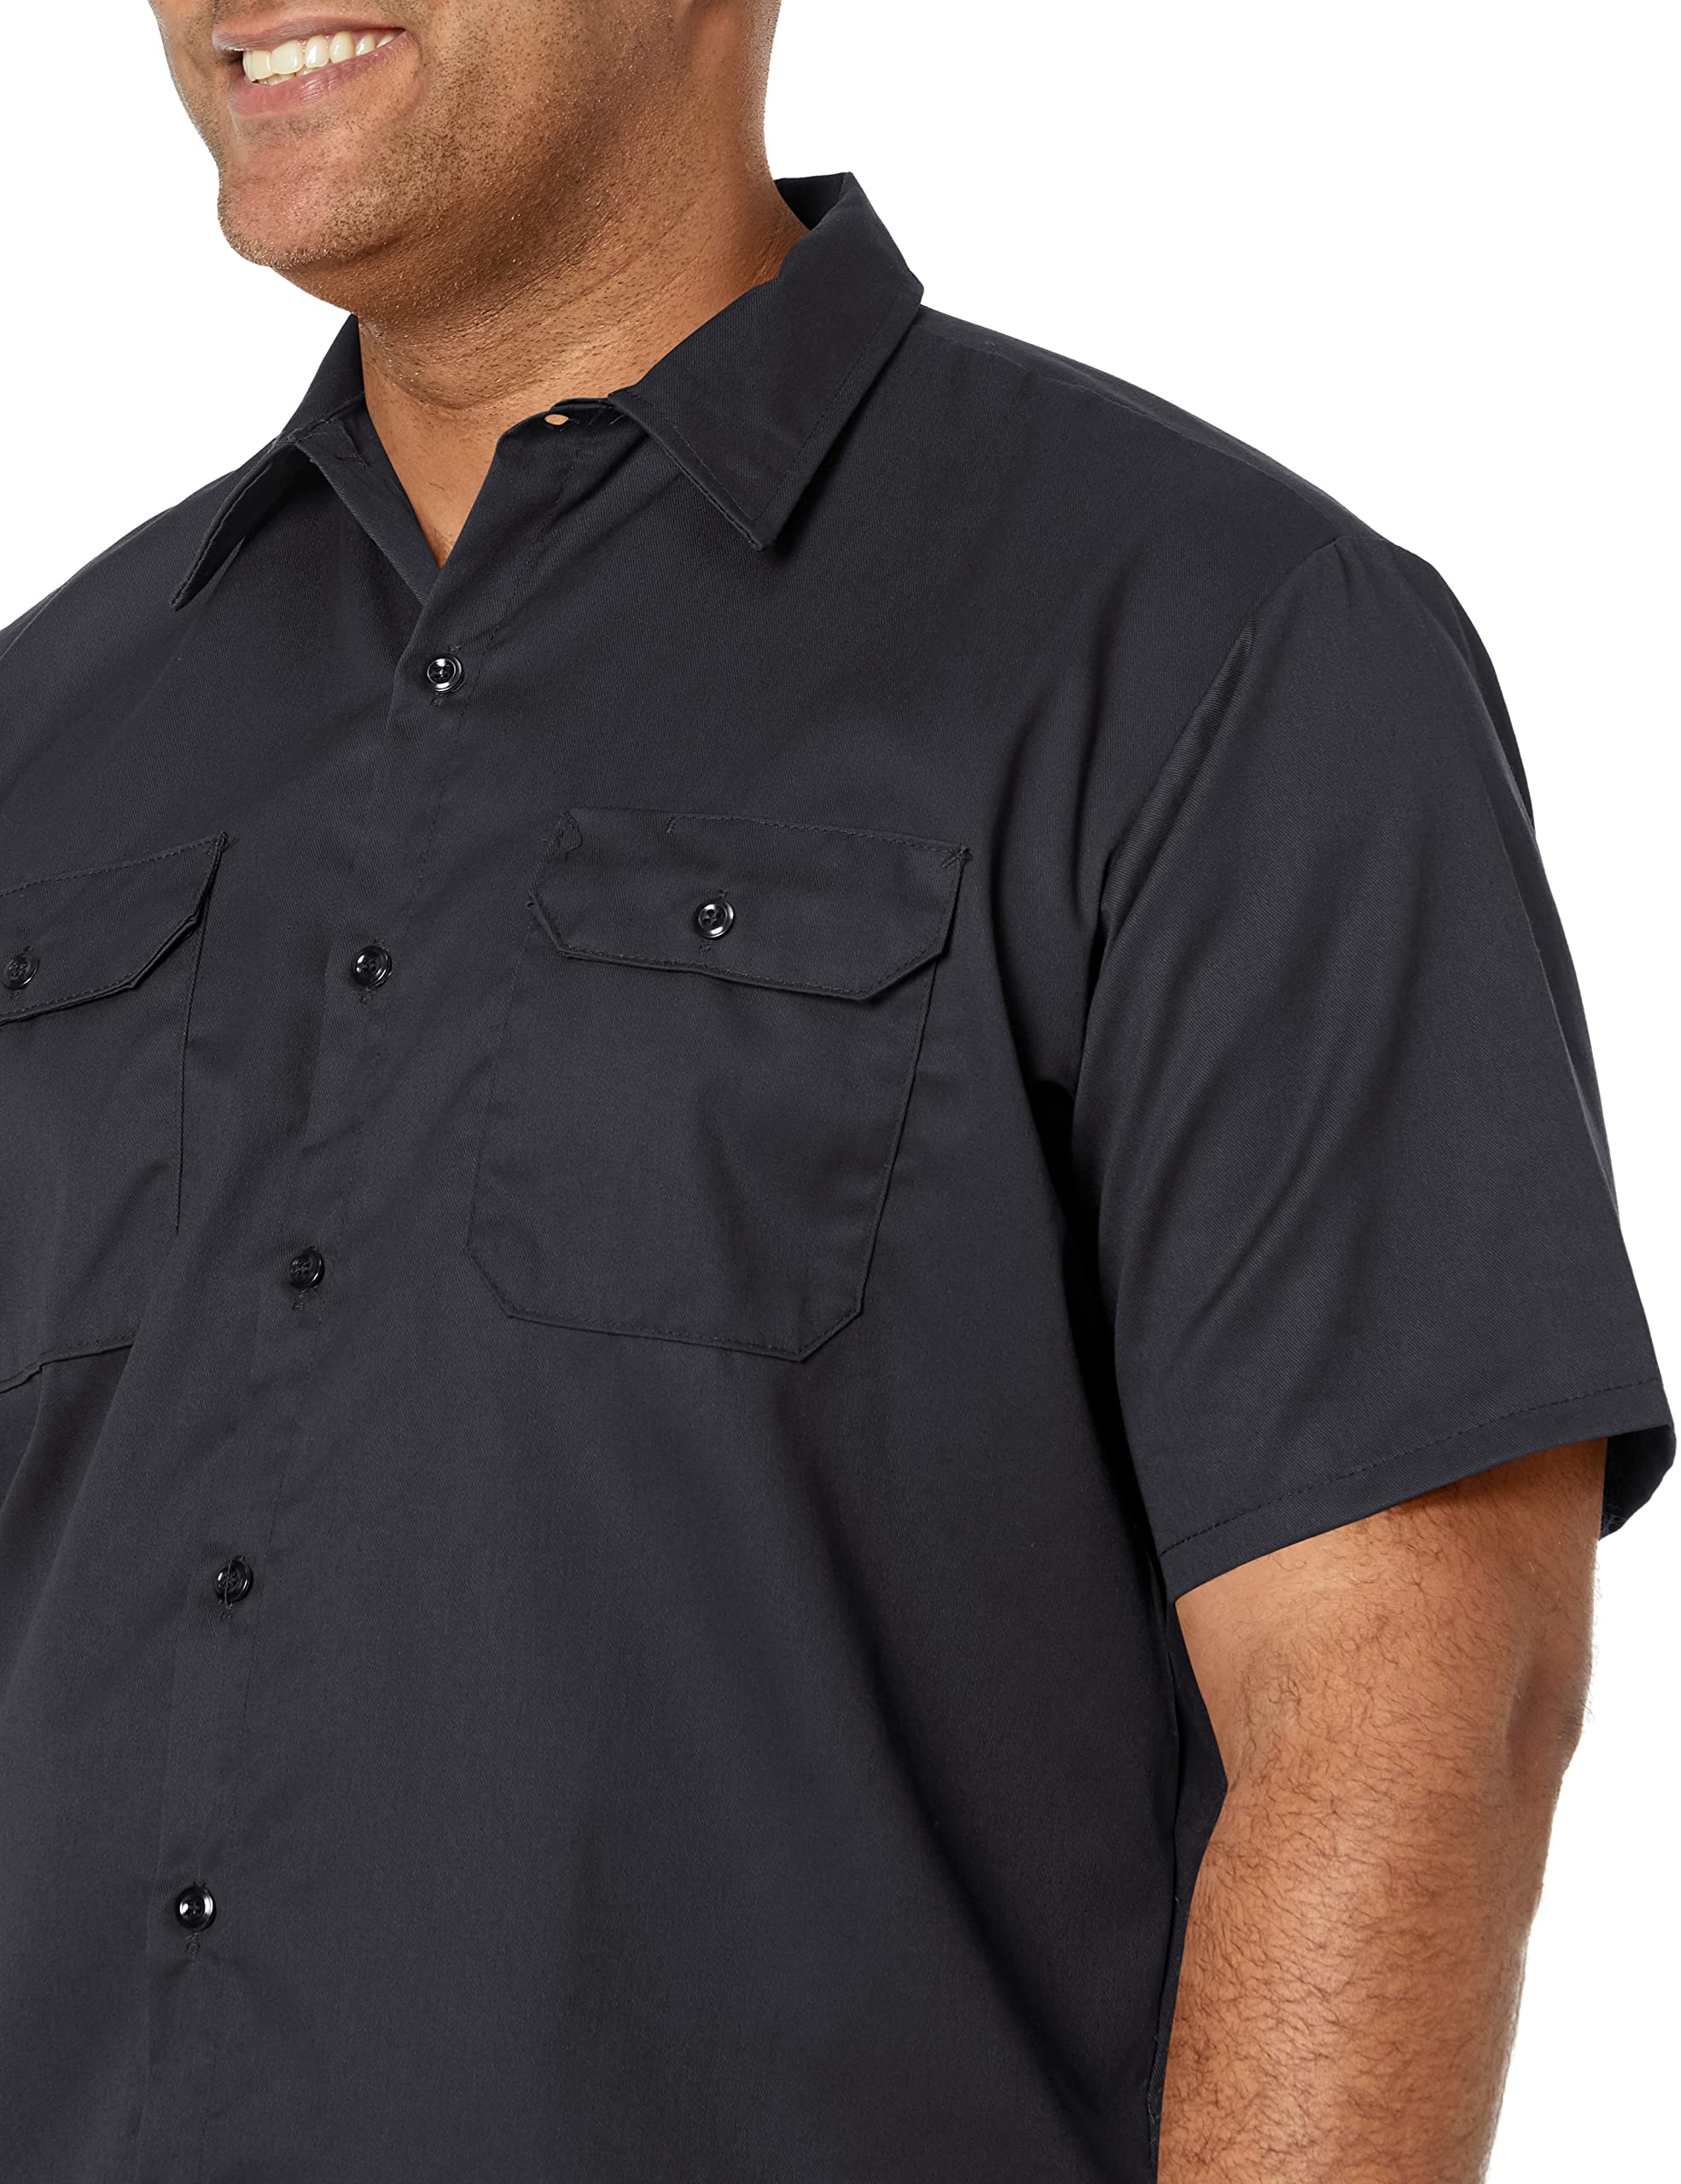 Red Kap Men's Utility Uniform Shirt